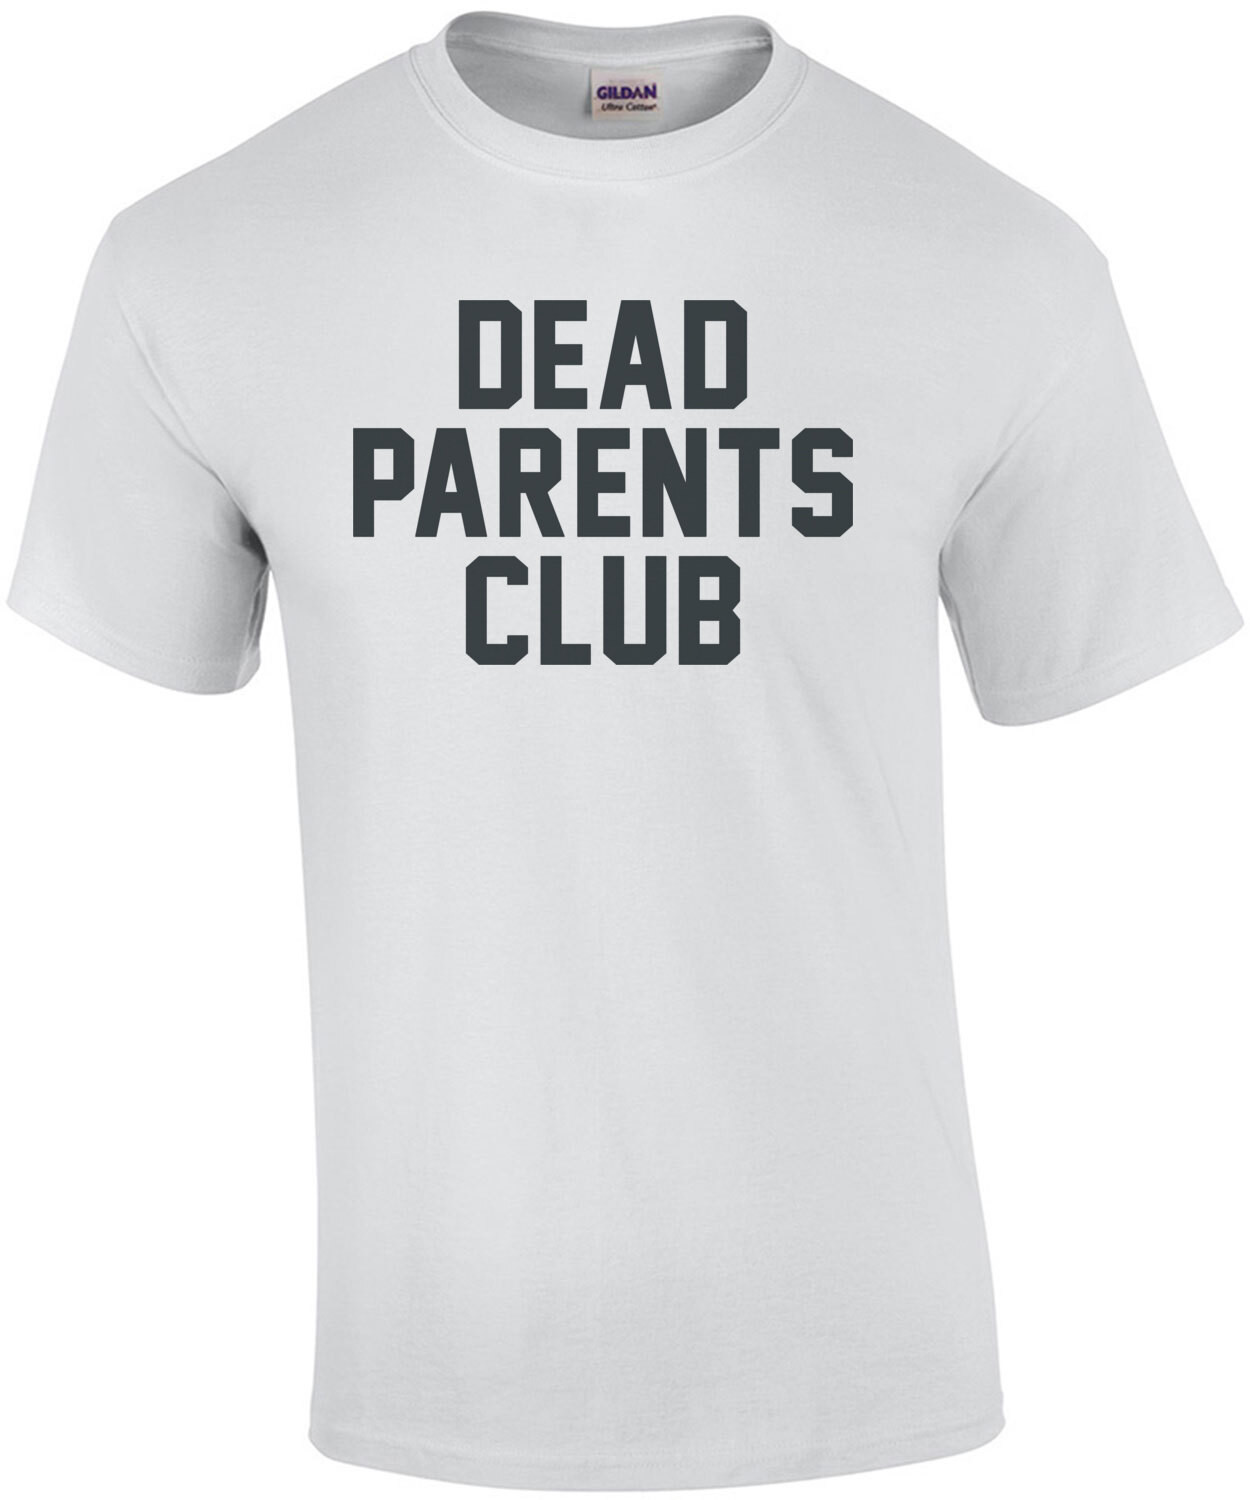 Dead Parents Club